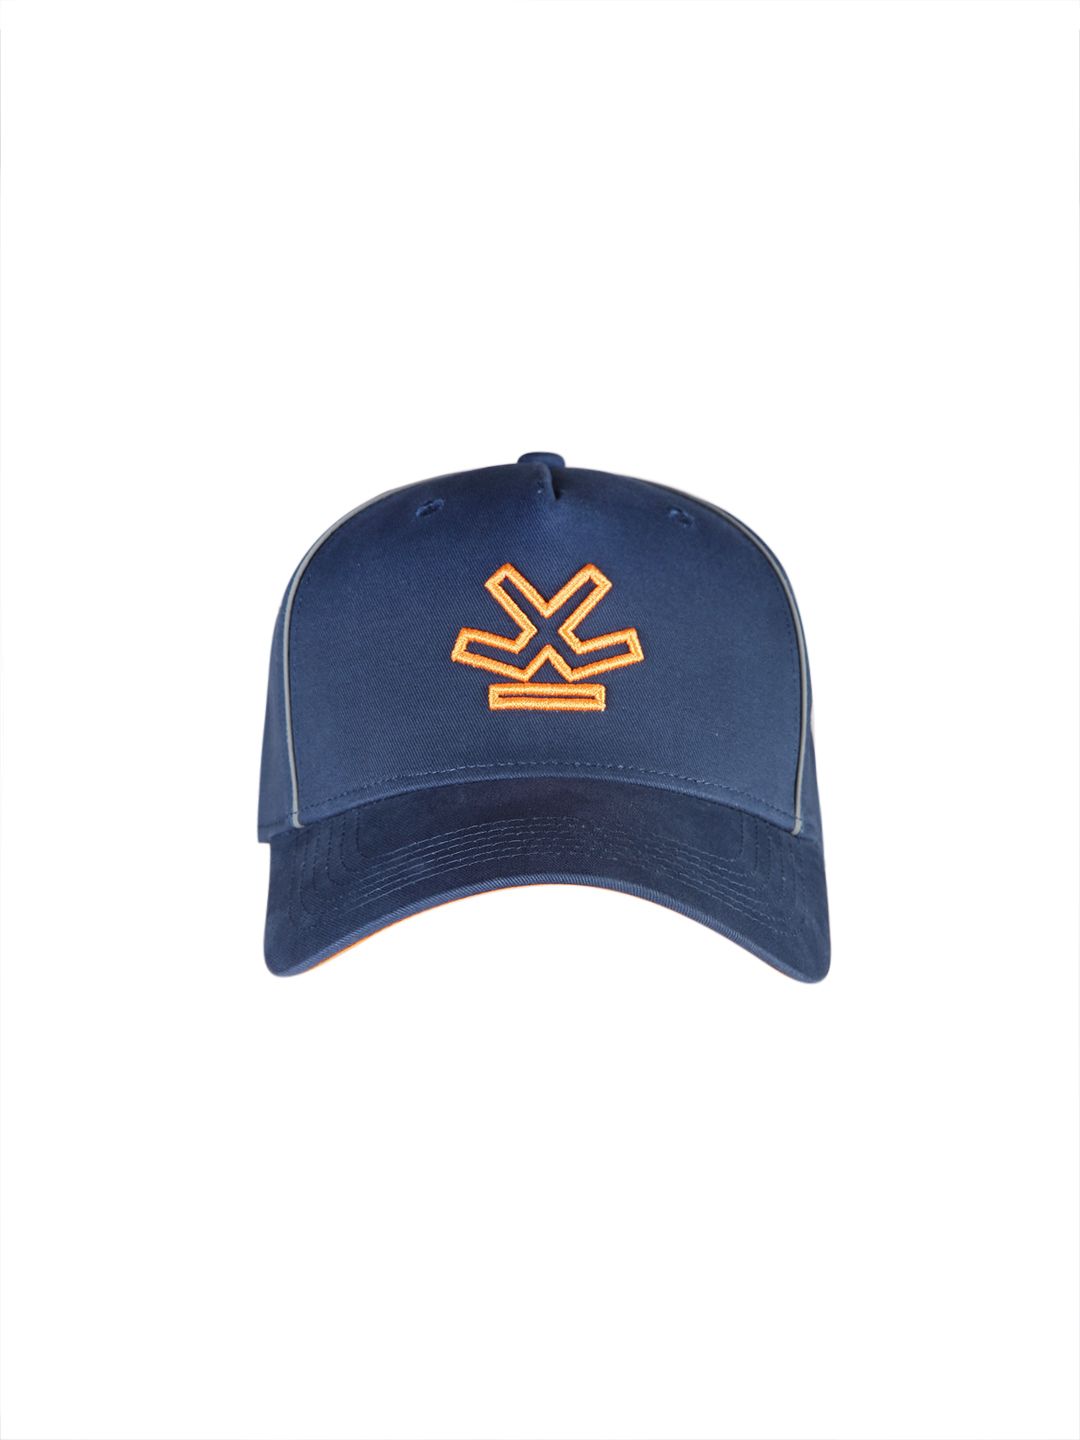 WROGN Unisex Navy Blue Embroidered Baseball Cap